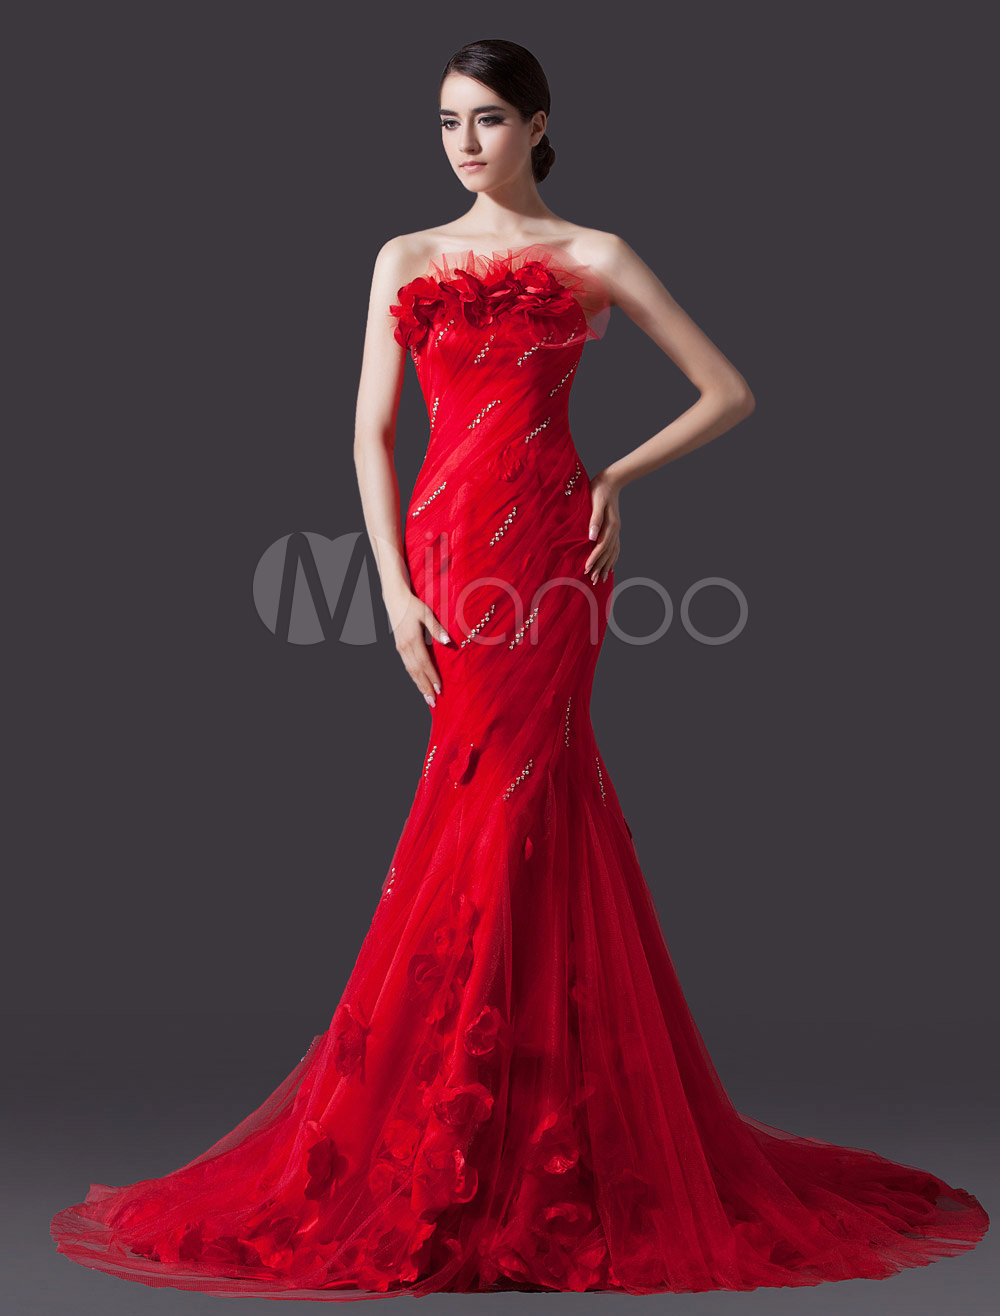 Red Mermaid Strapless Flower Court Train Bridal Wedding Gown (Red Wedding Dress) photo